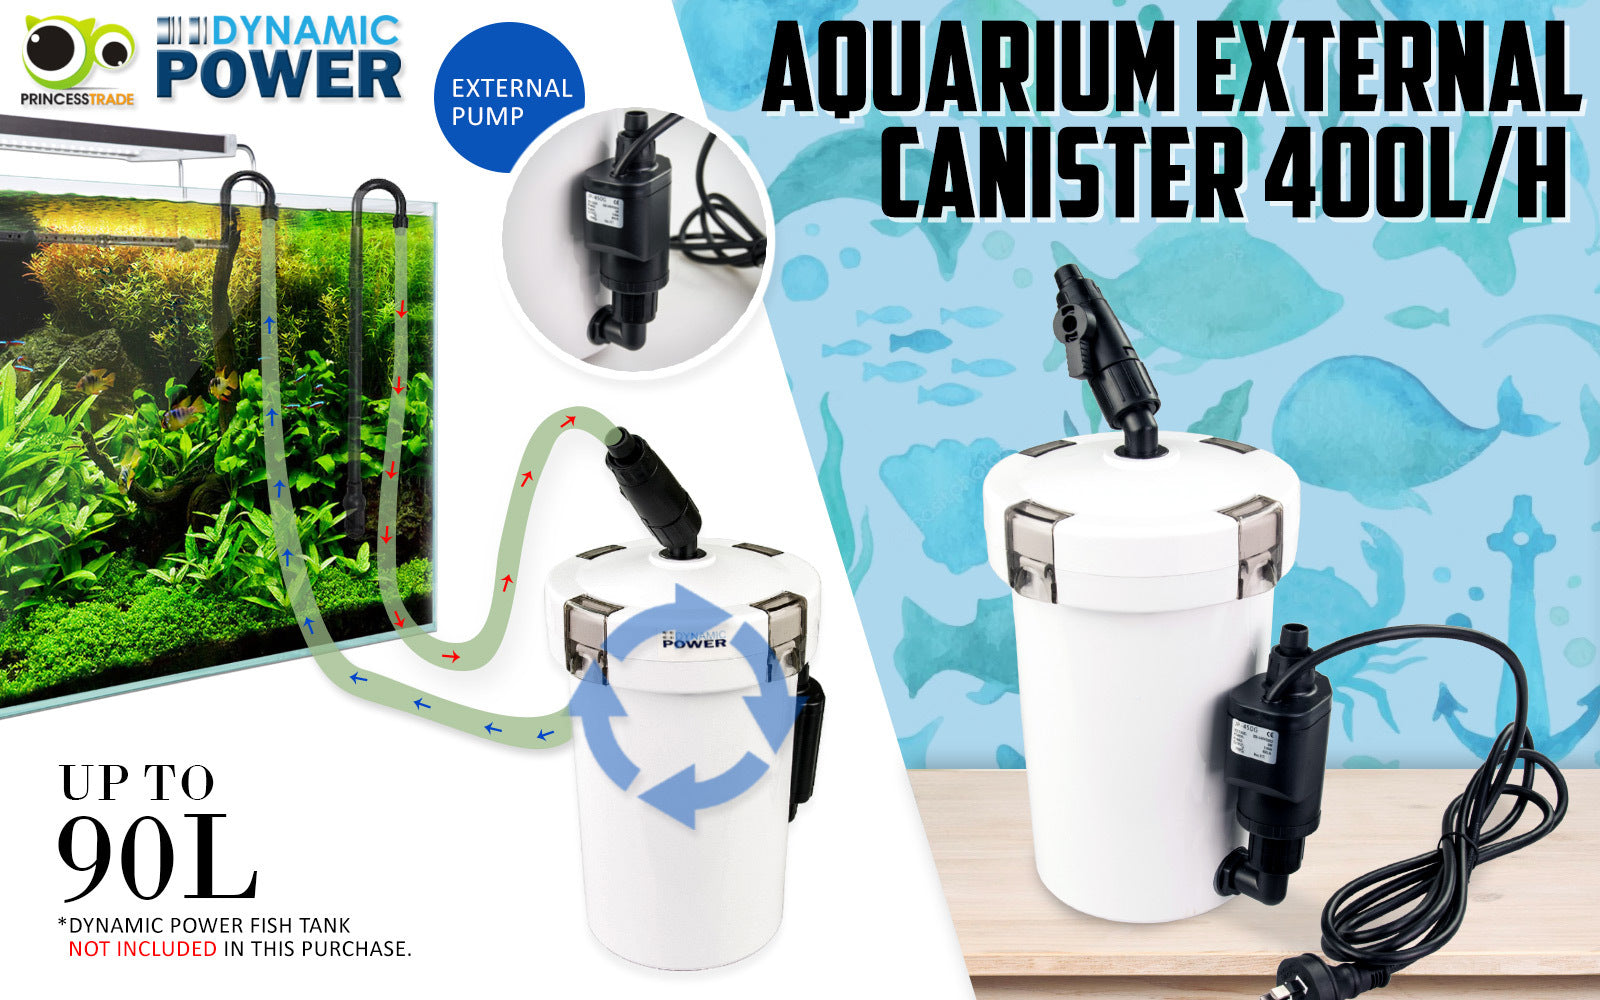 Aquarium External Canister Filter 400L/H